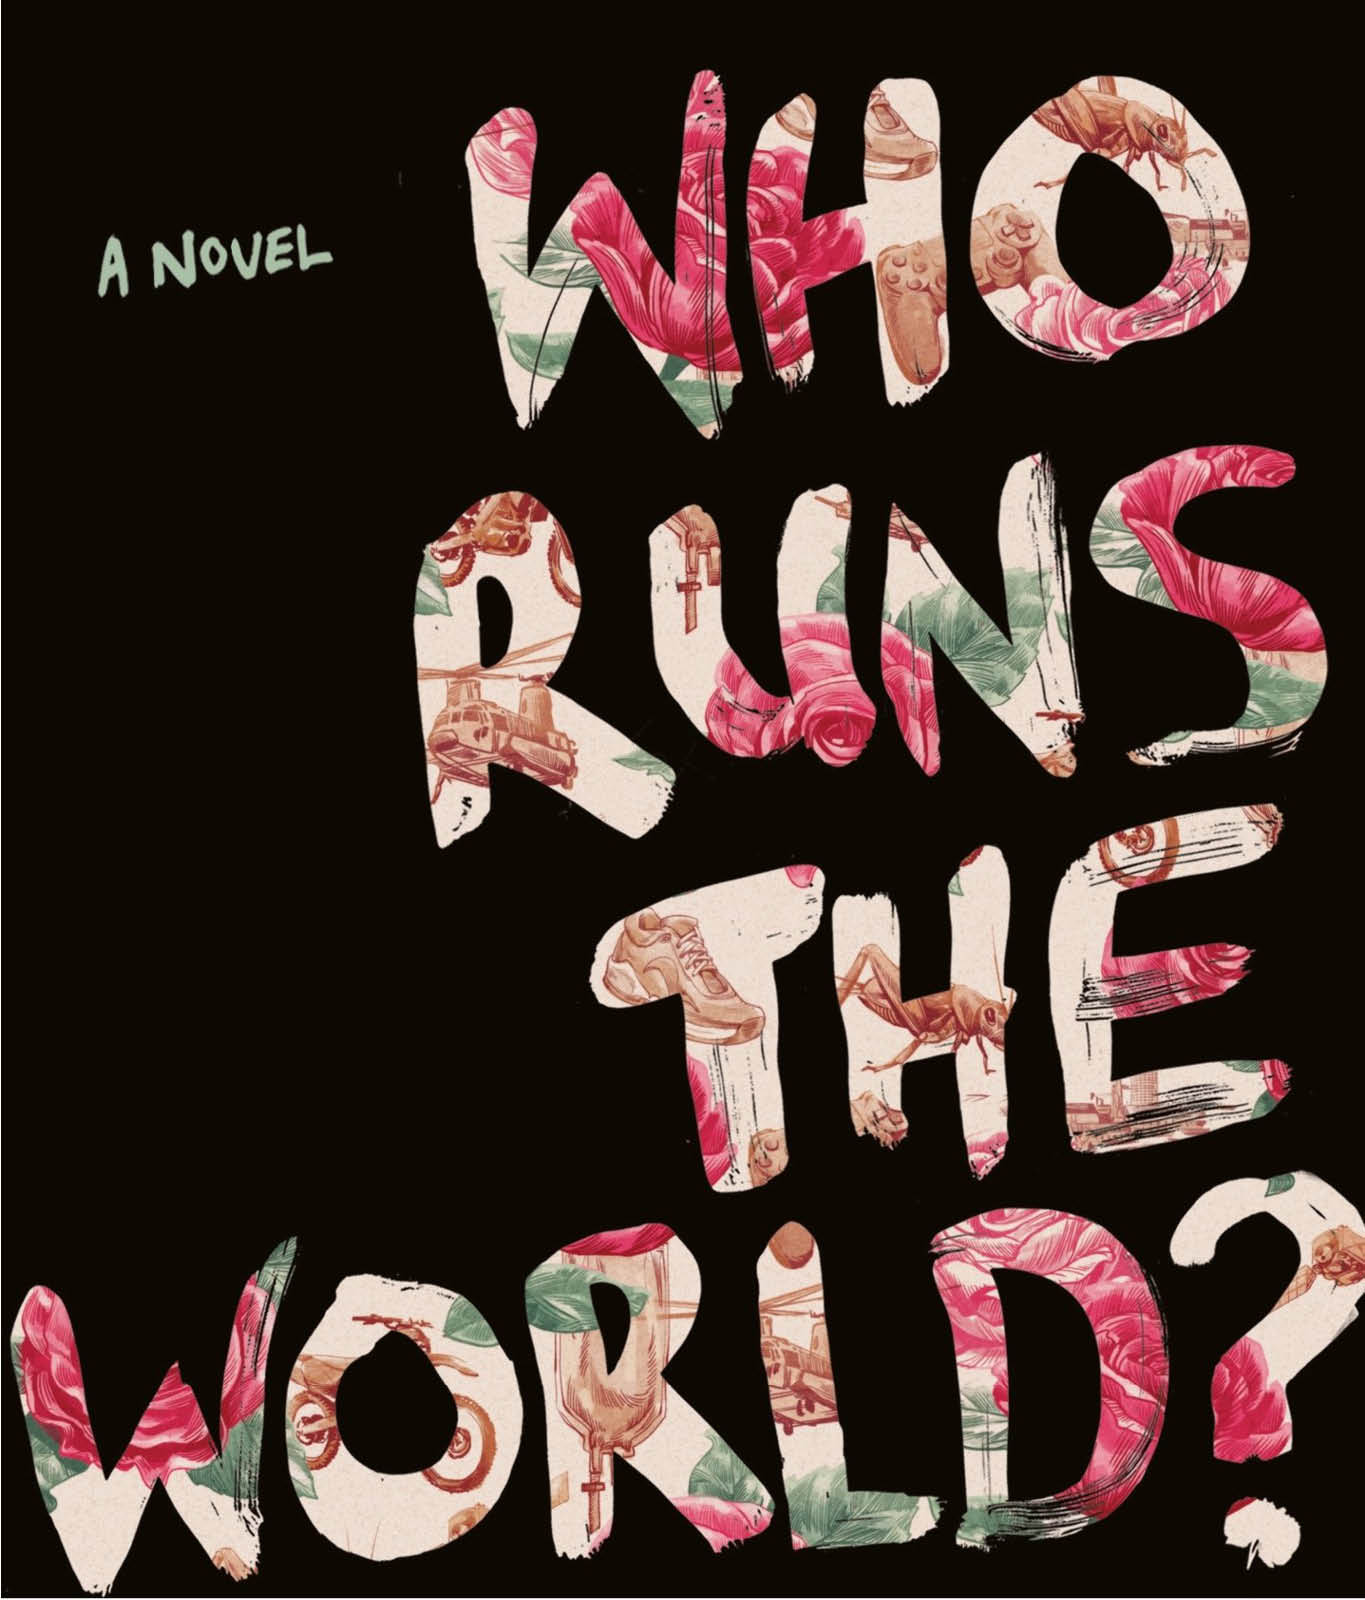 Who Runs the World by Virginia Bergin